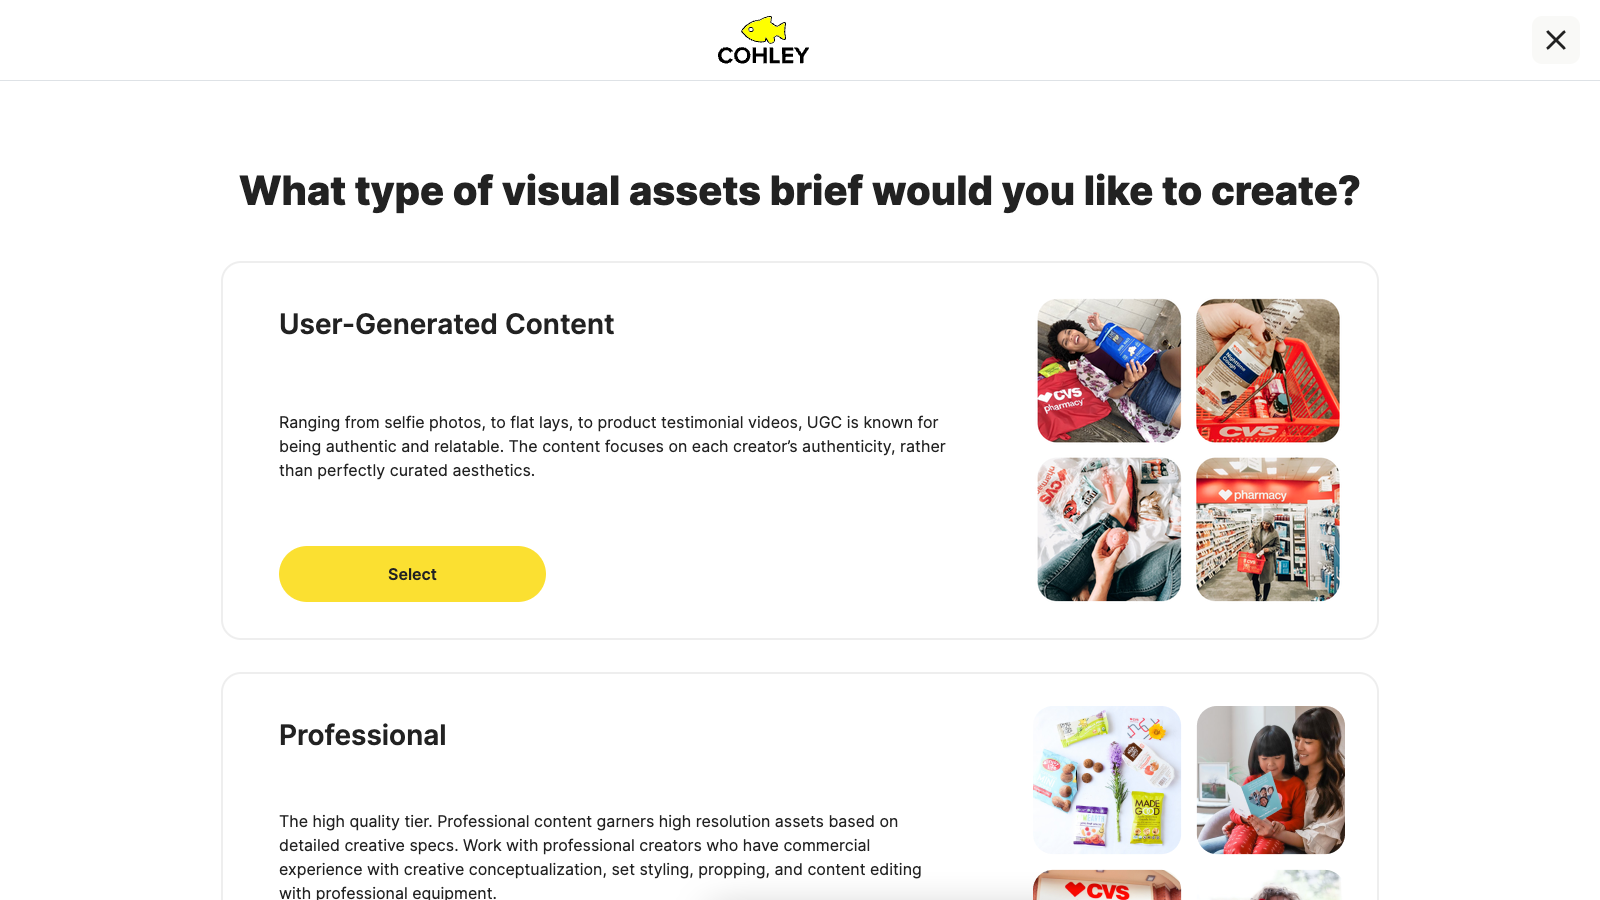 Create a new visual asset brief